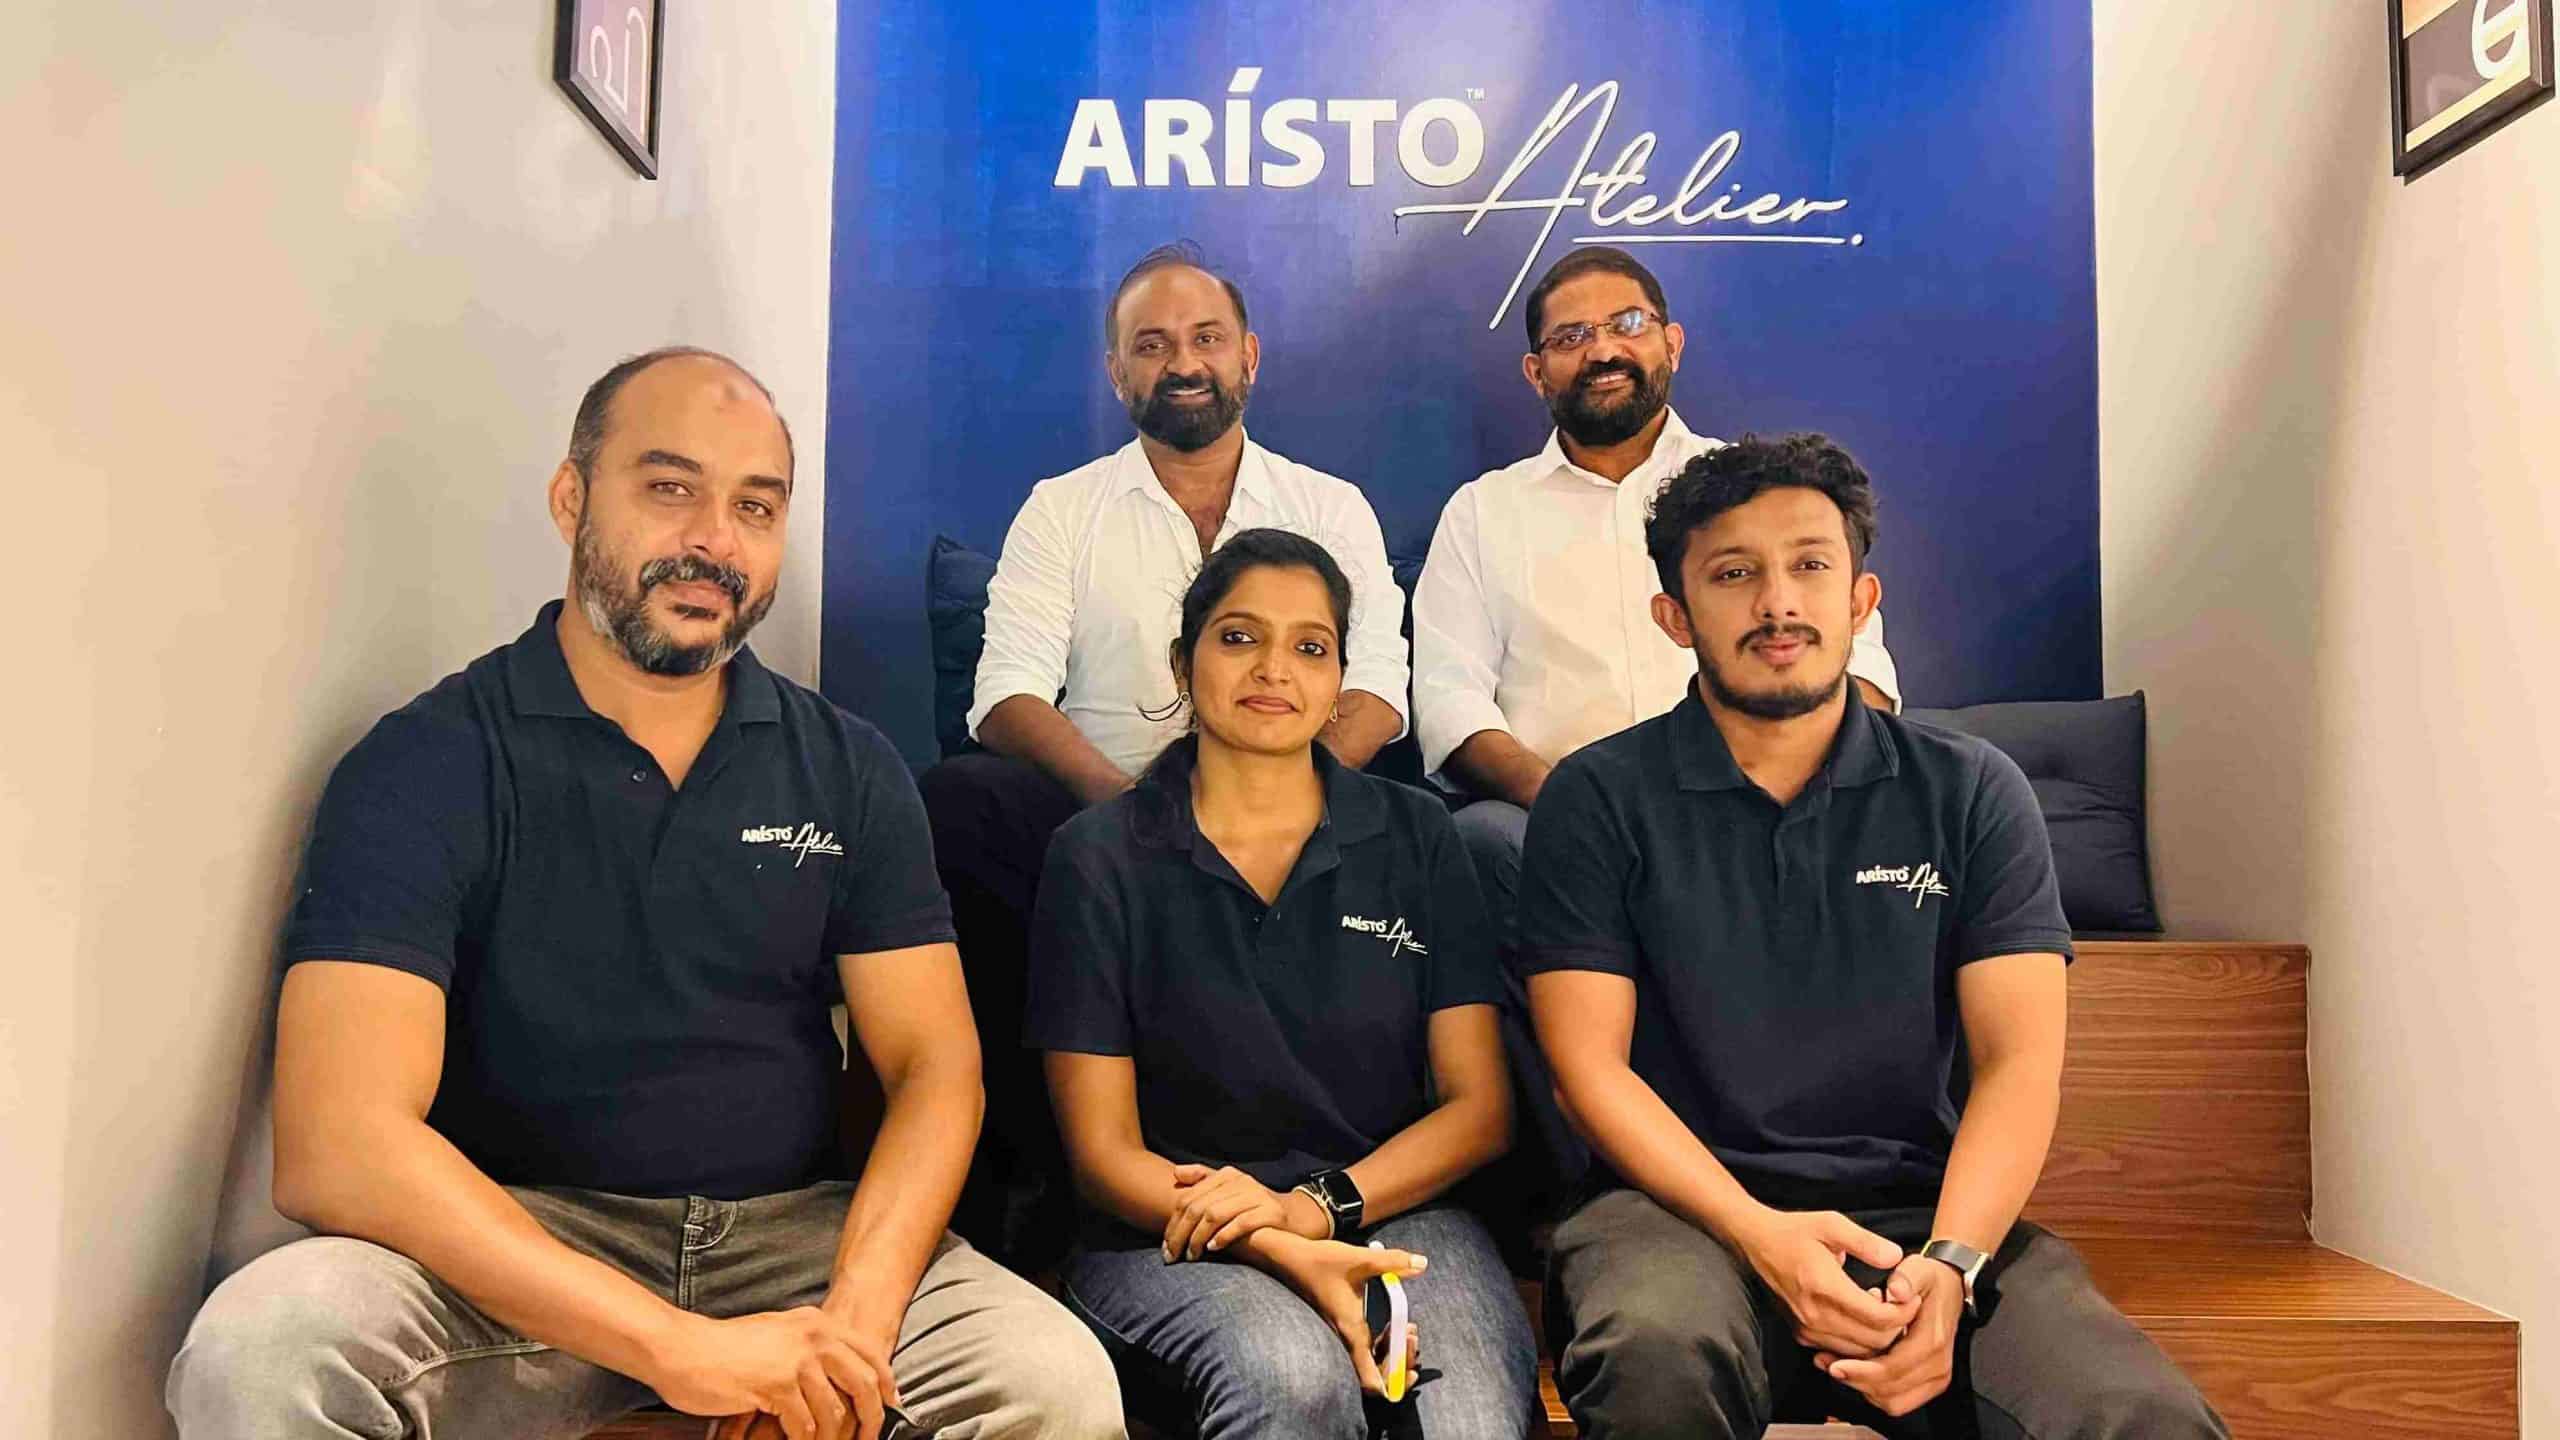 aristo atelier kerala for wardrobe design and furniture manufacturers in Kerala